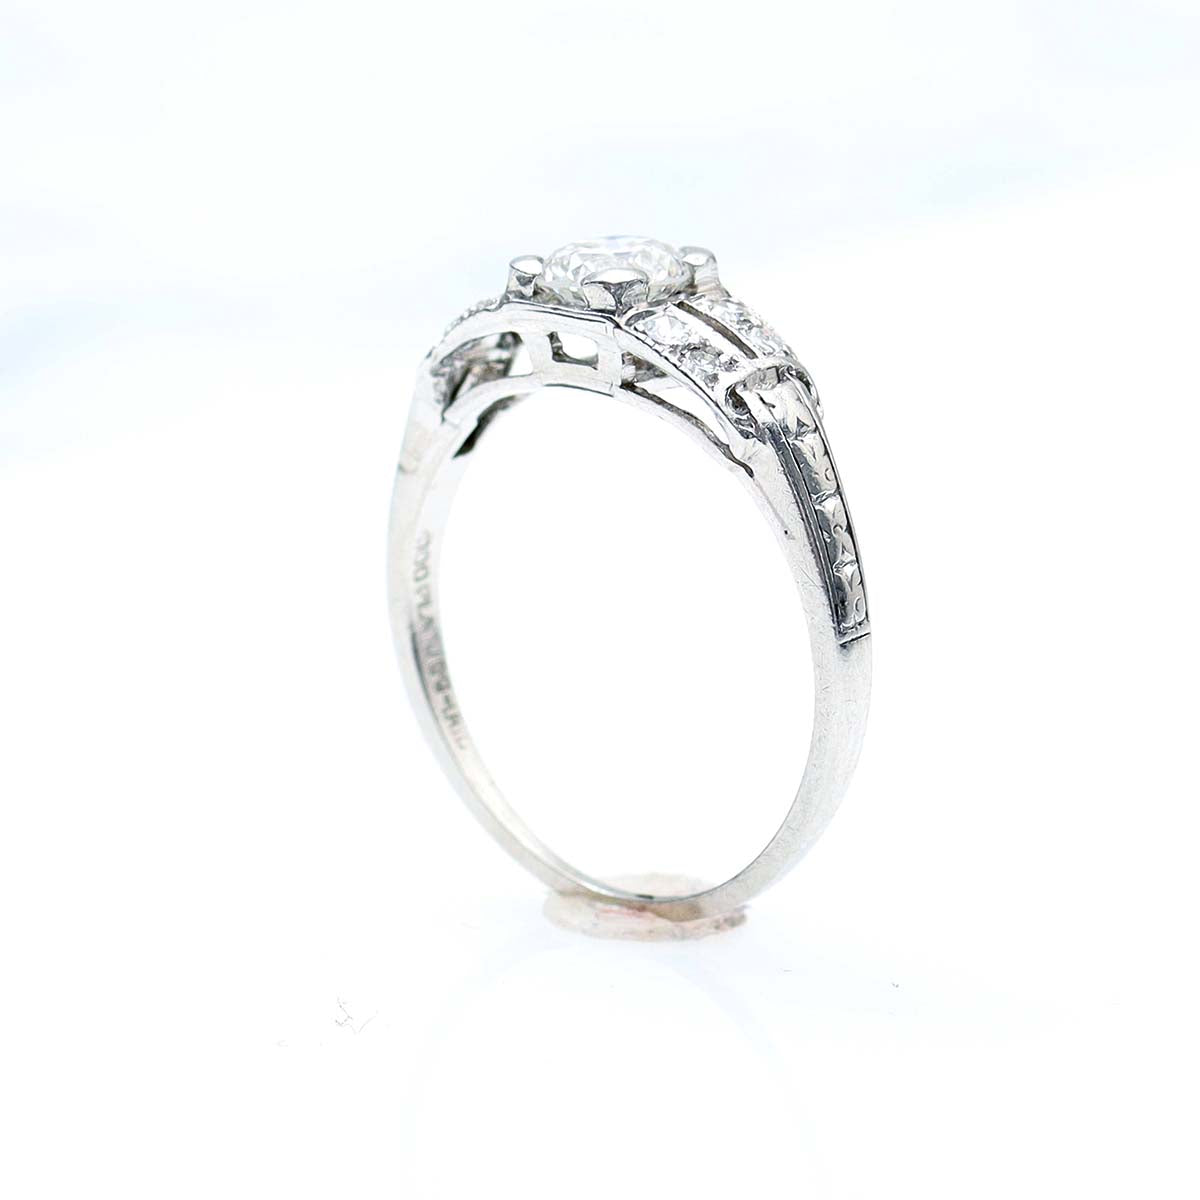 Antique Art Deco Engagement Ring #VR220714-7